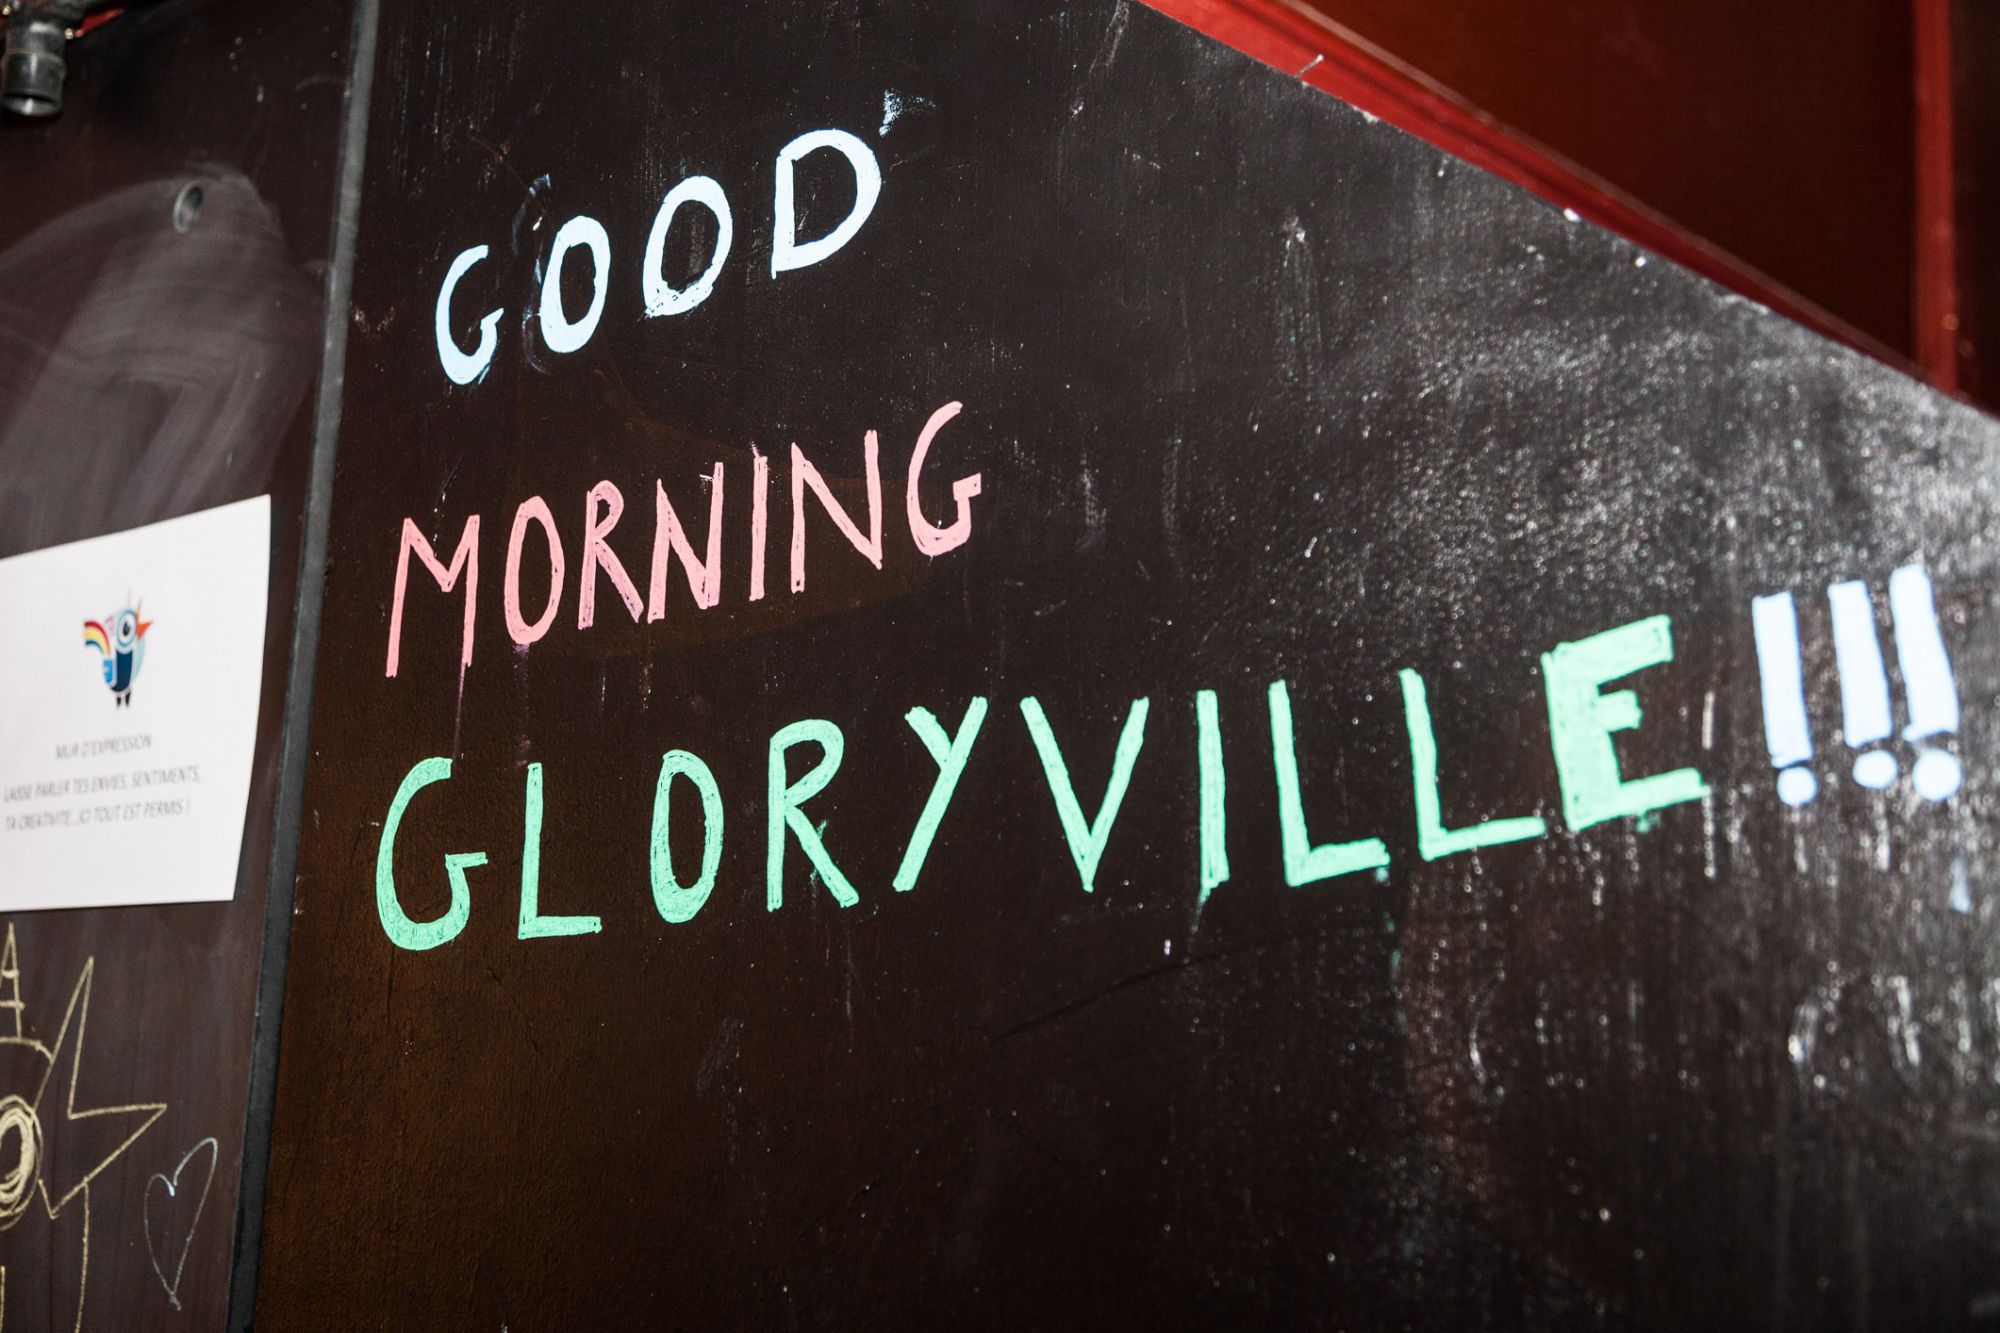 Good morning Gloryville